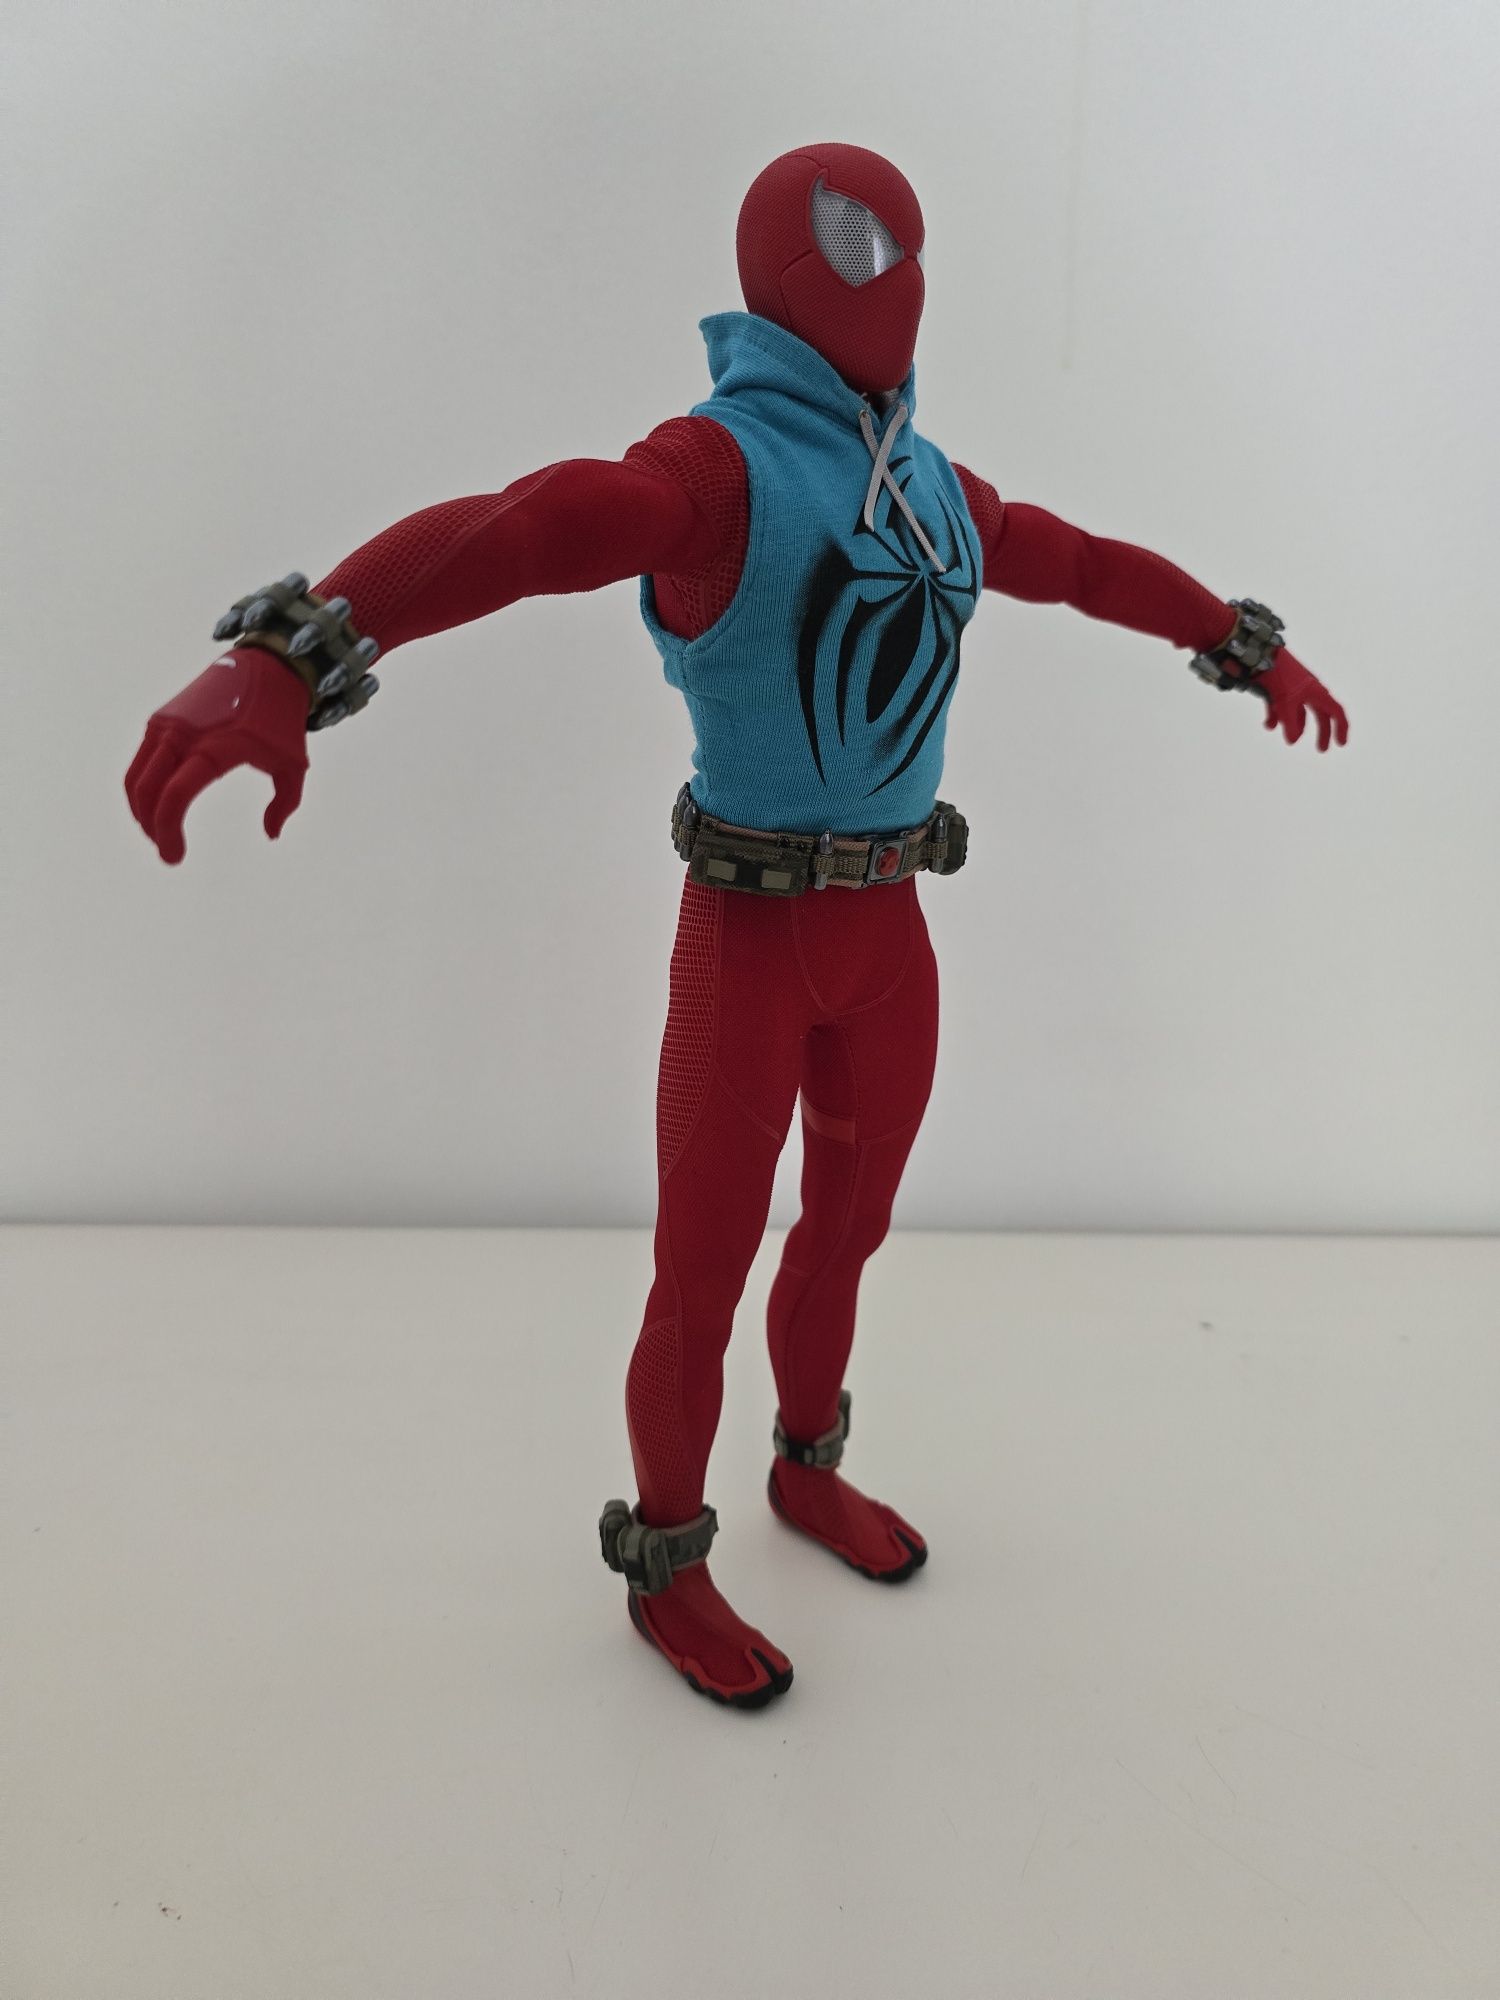 Hot toys spider man